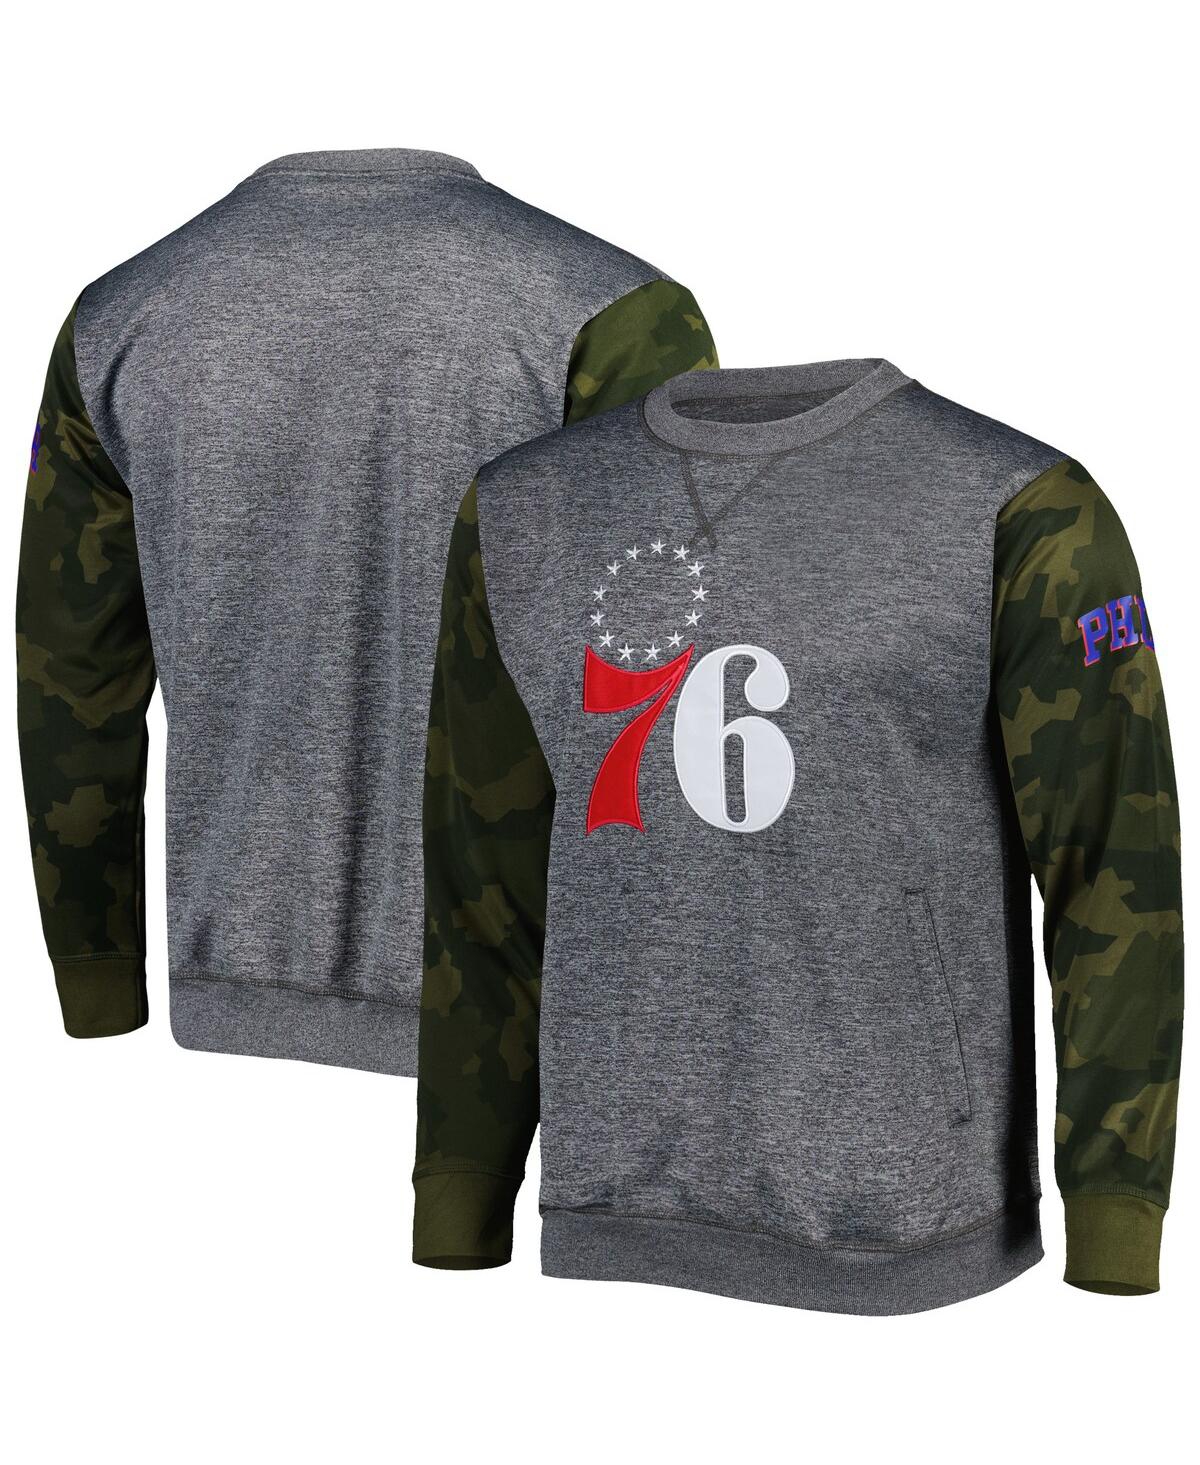 Shop Fanatics Men's  Heather Charcoal Philadelphia 76ers Camo Stitched Sweatshirt